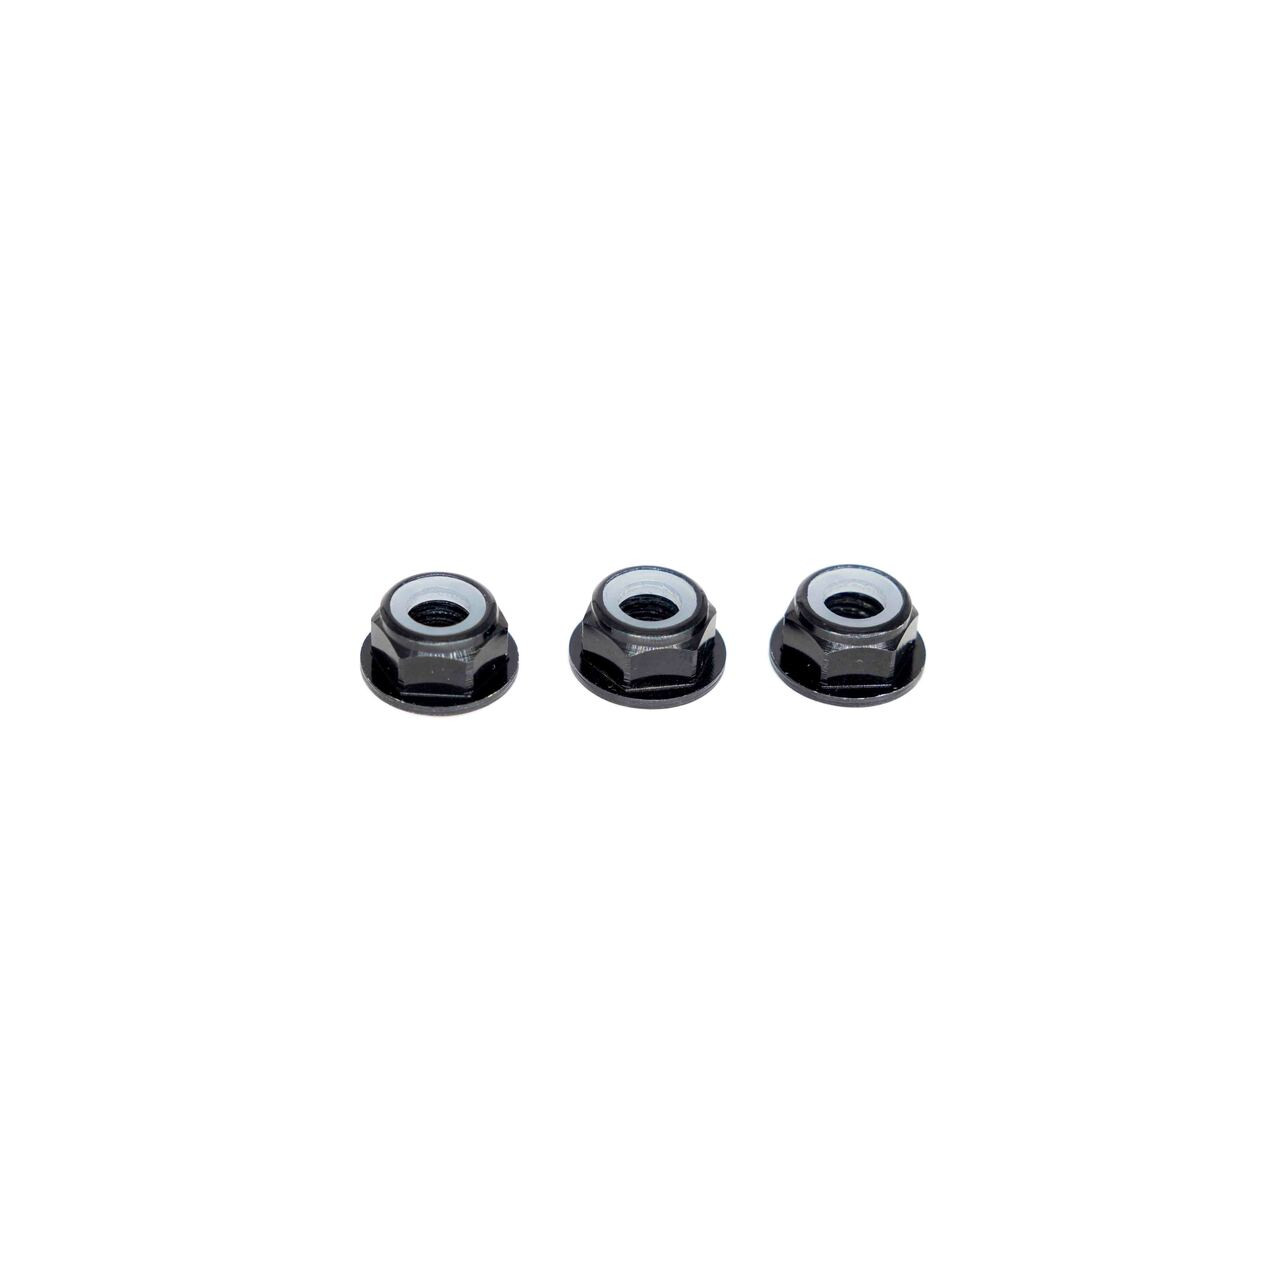 Juggernaut Tuner Kit Colored Nylon Locking Nuts, 3 Pack (JUGTNUT3PK) Black